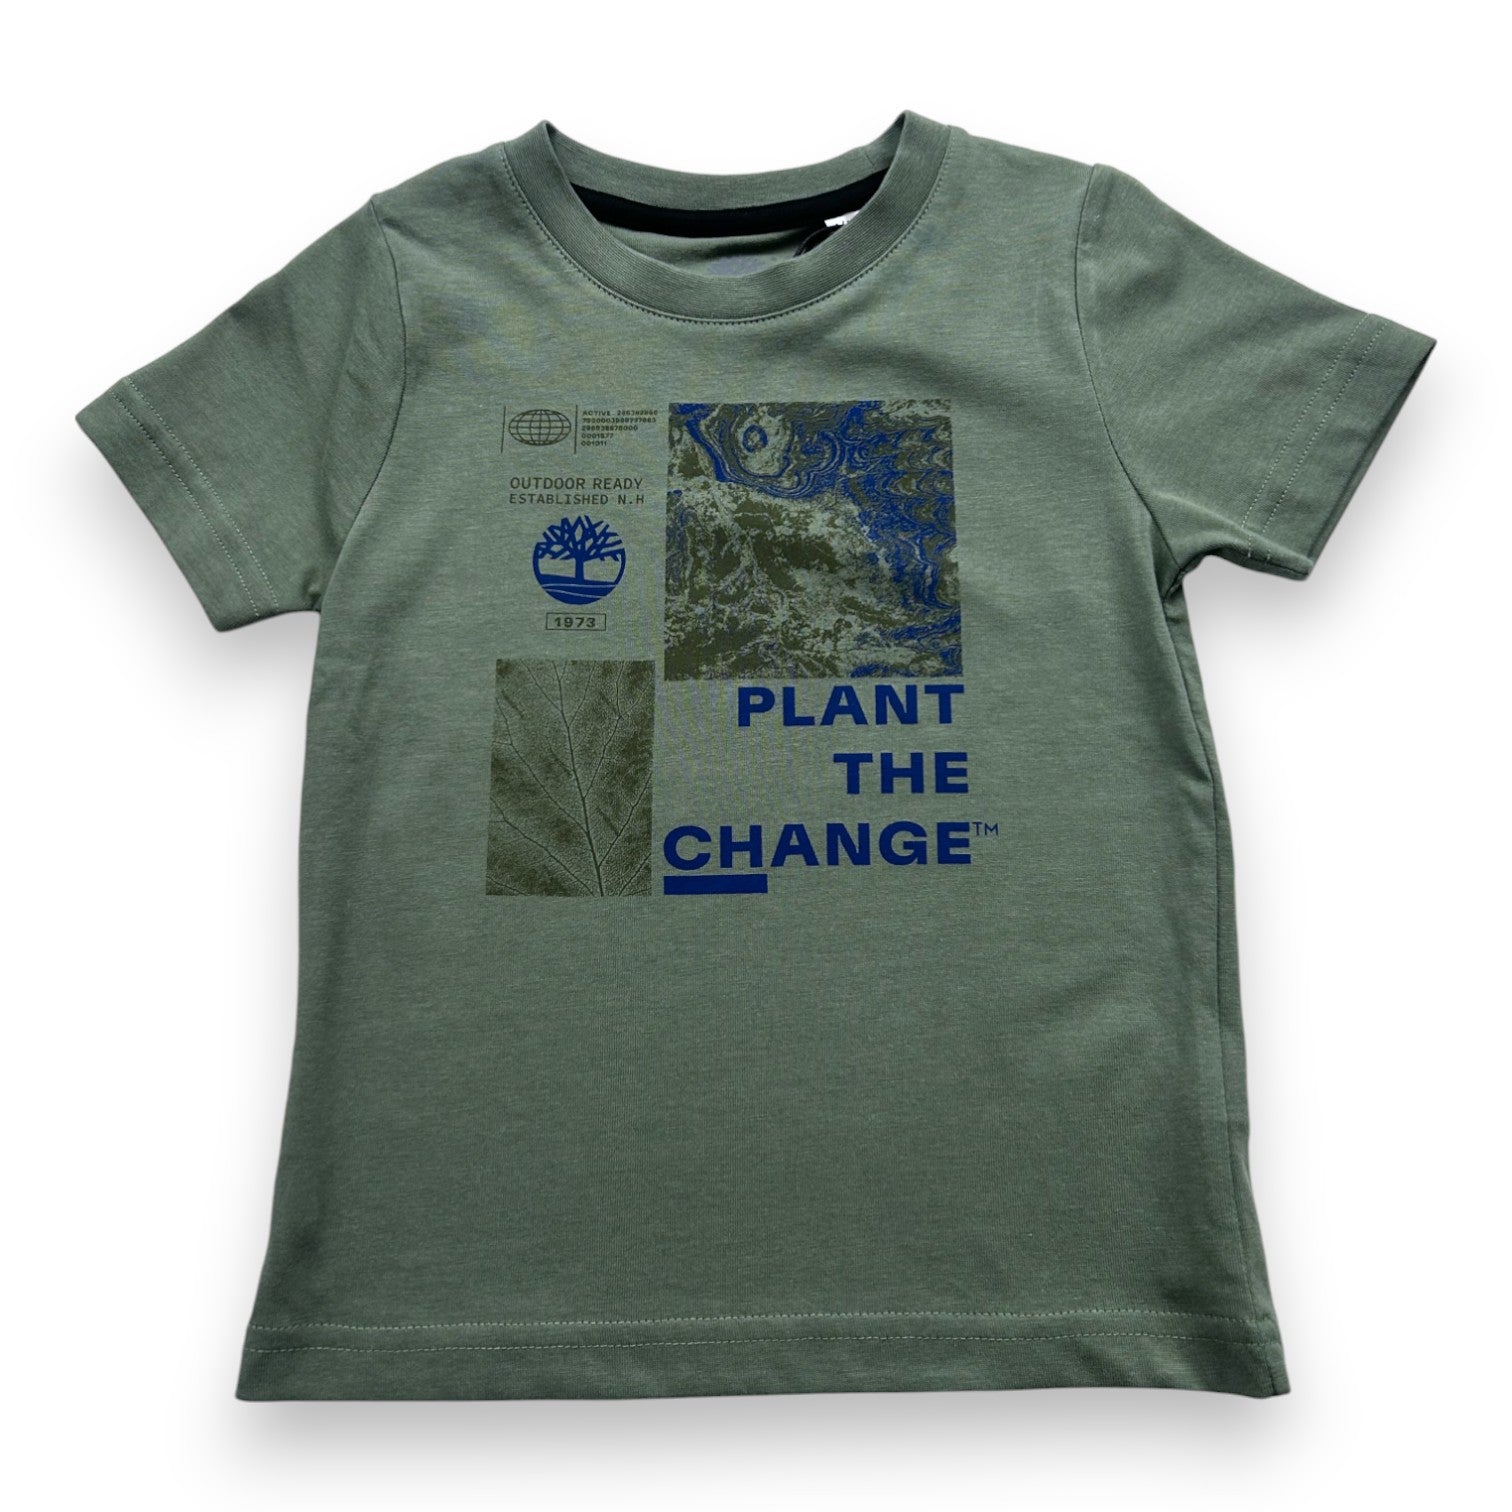 TIMBERLAND - T-shirt kaki imprimé (neuf)  - 4 ans